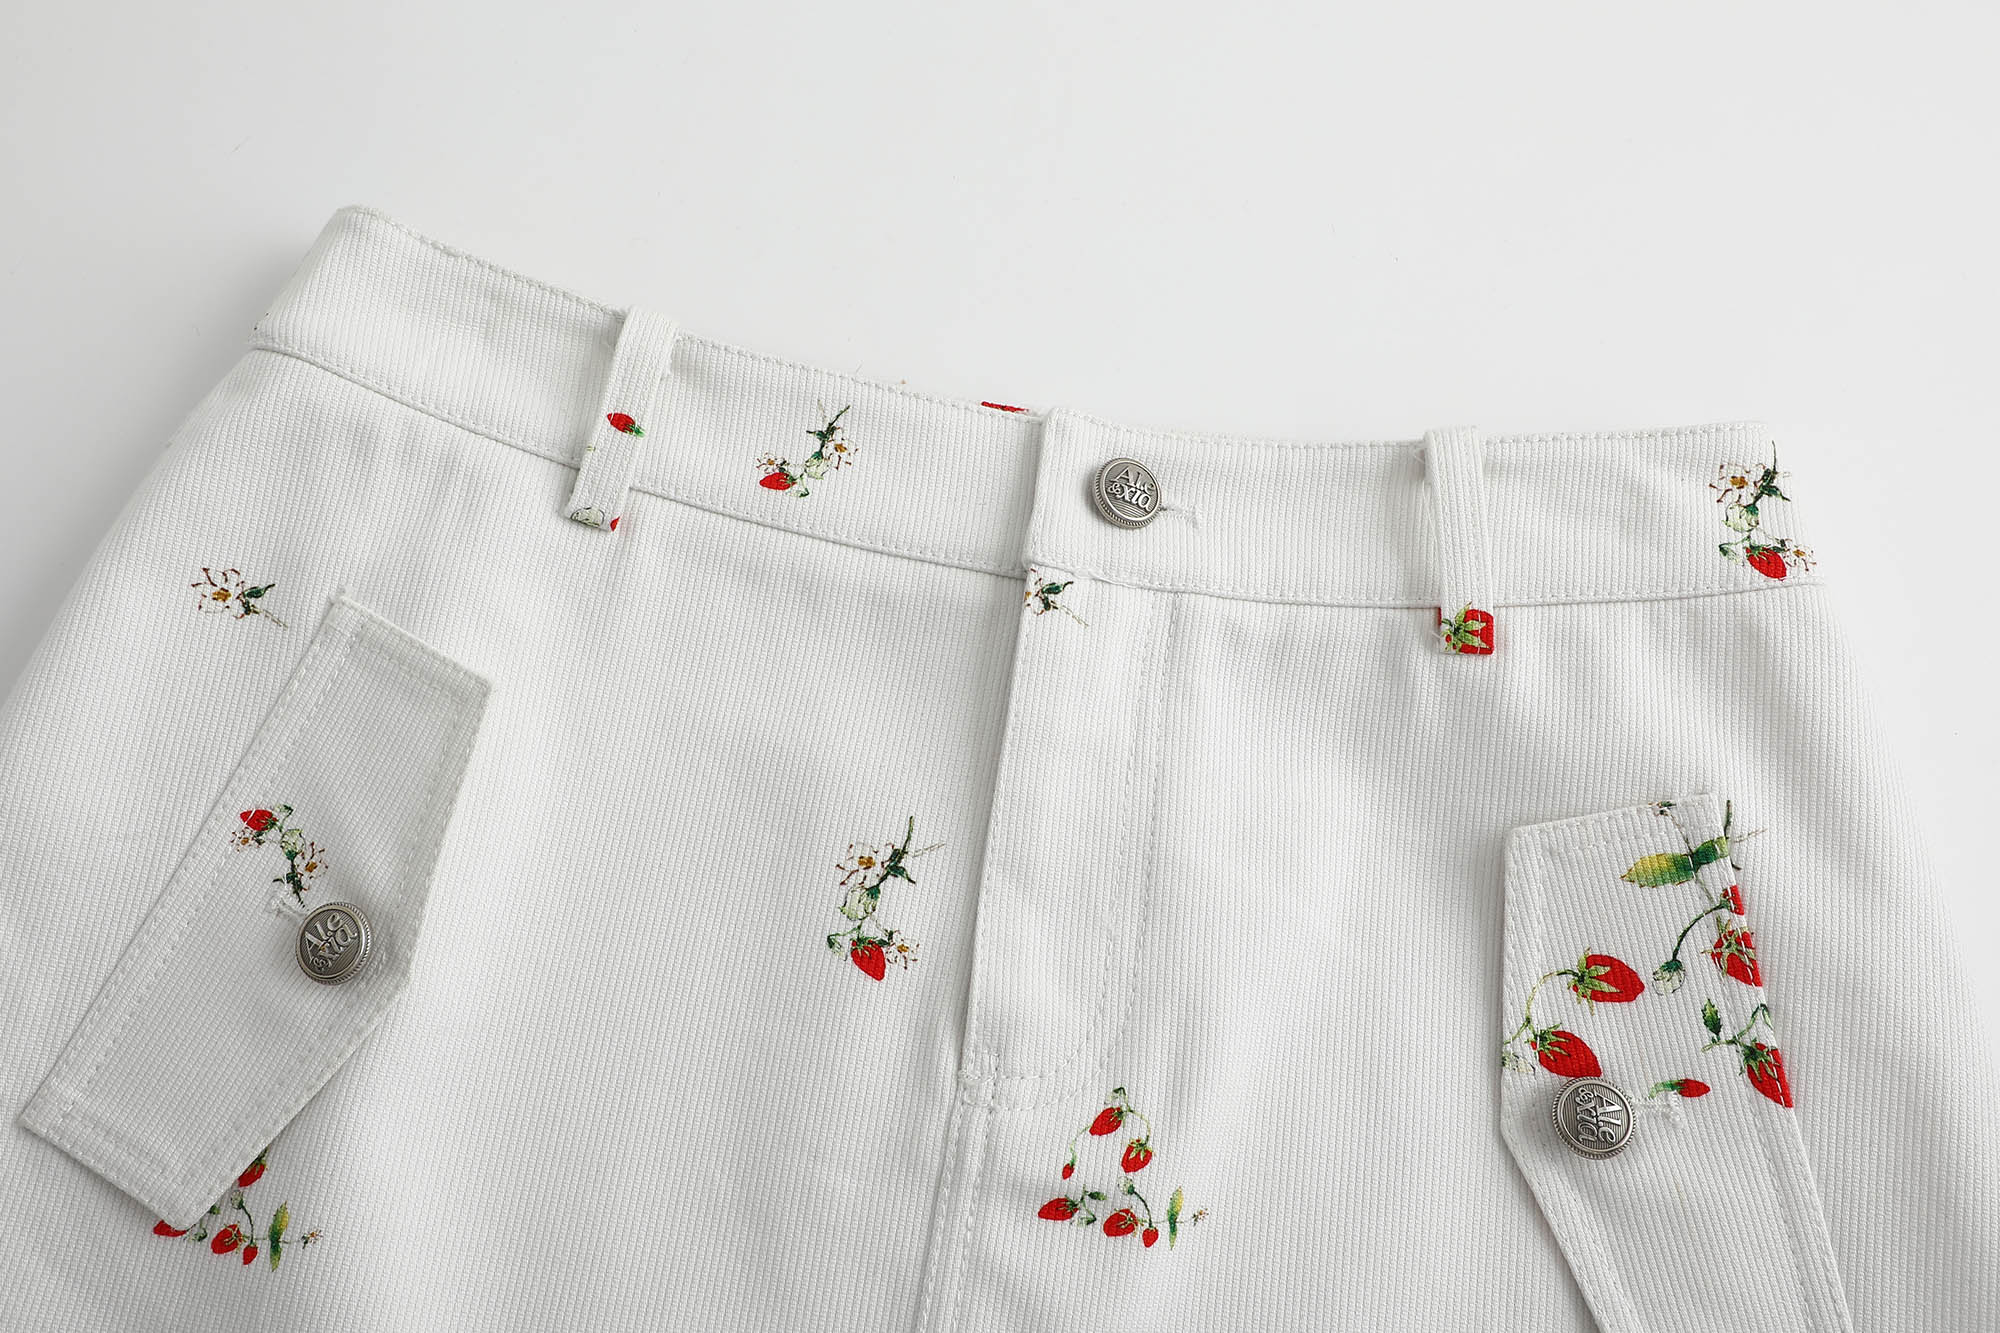 Alexia Sandra Strawberry Club Denim Skirt in White | MADA IN CHINA